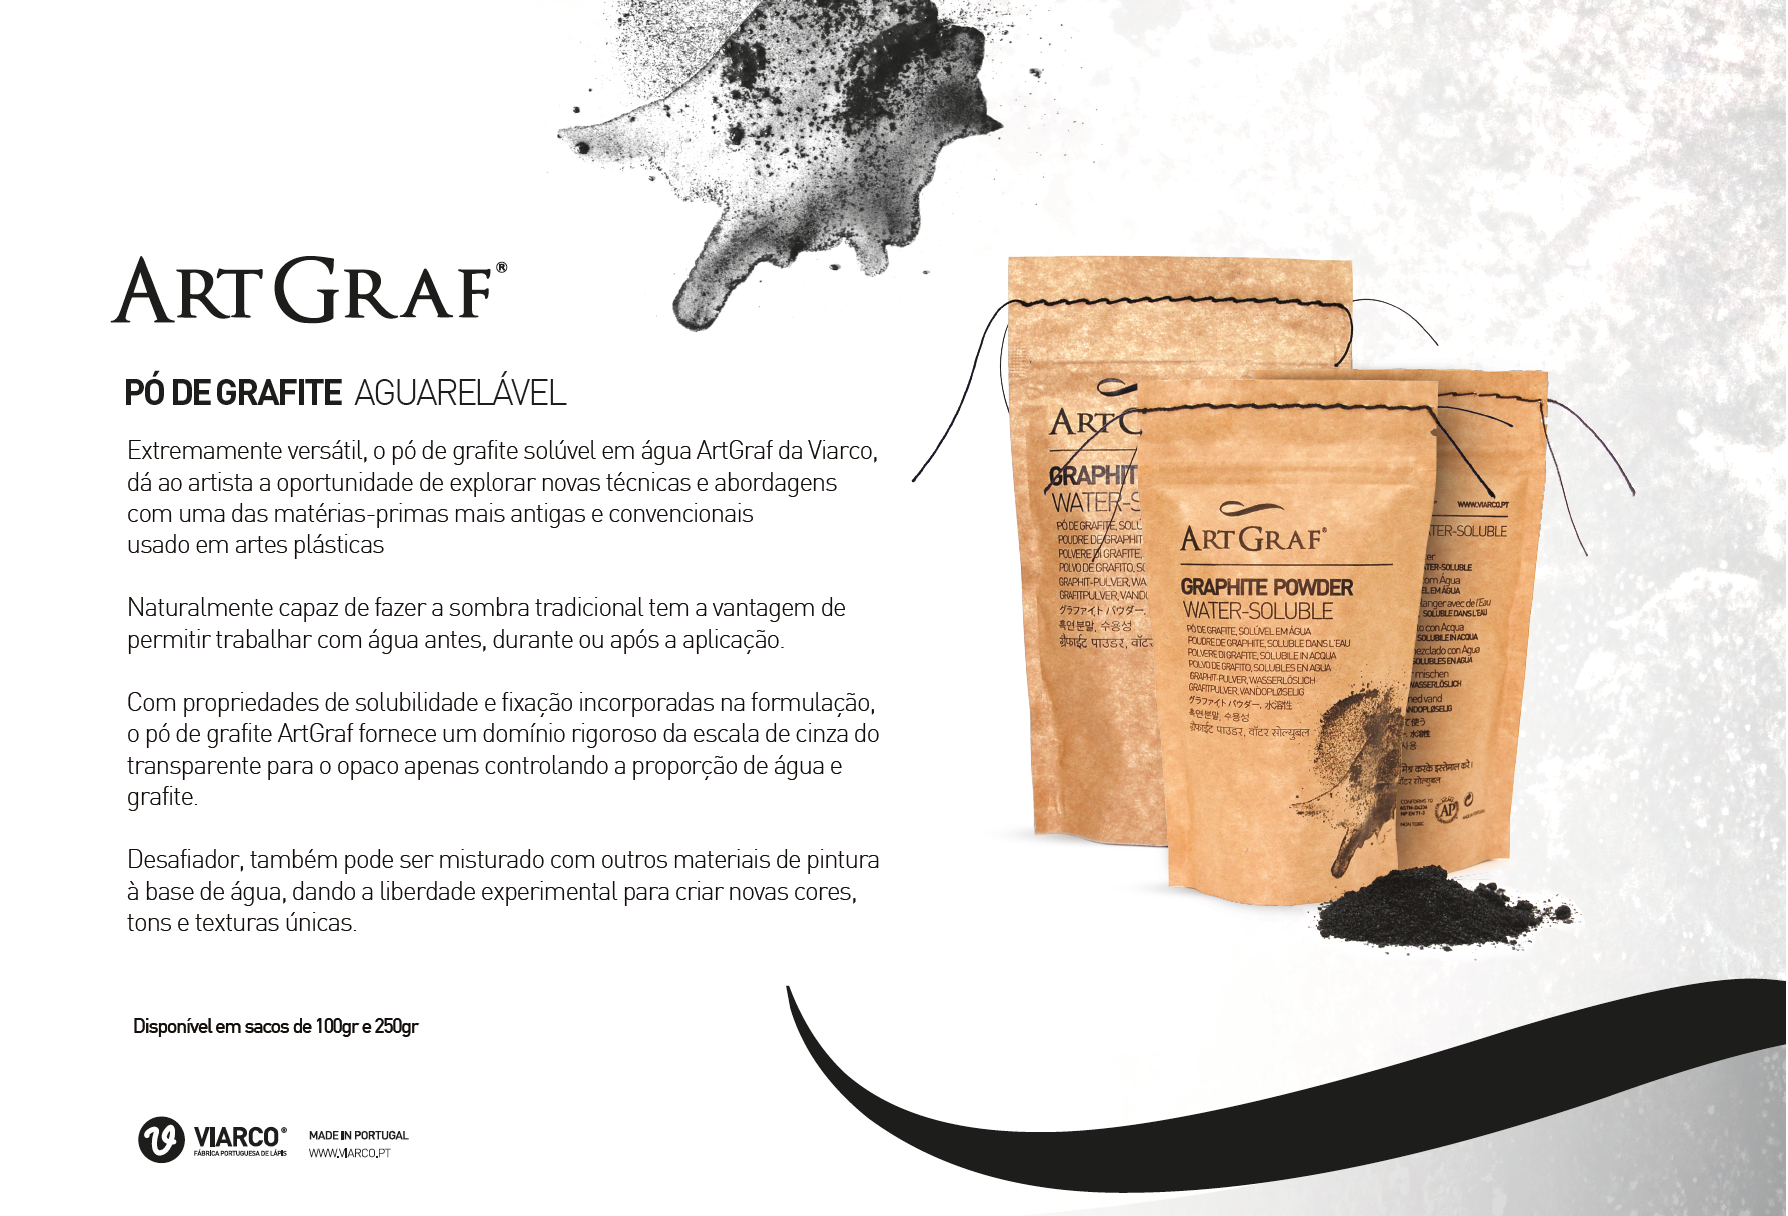 ArtGraf Graphite Powder (water-soluble) — Soho Art Materials